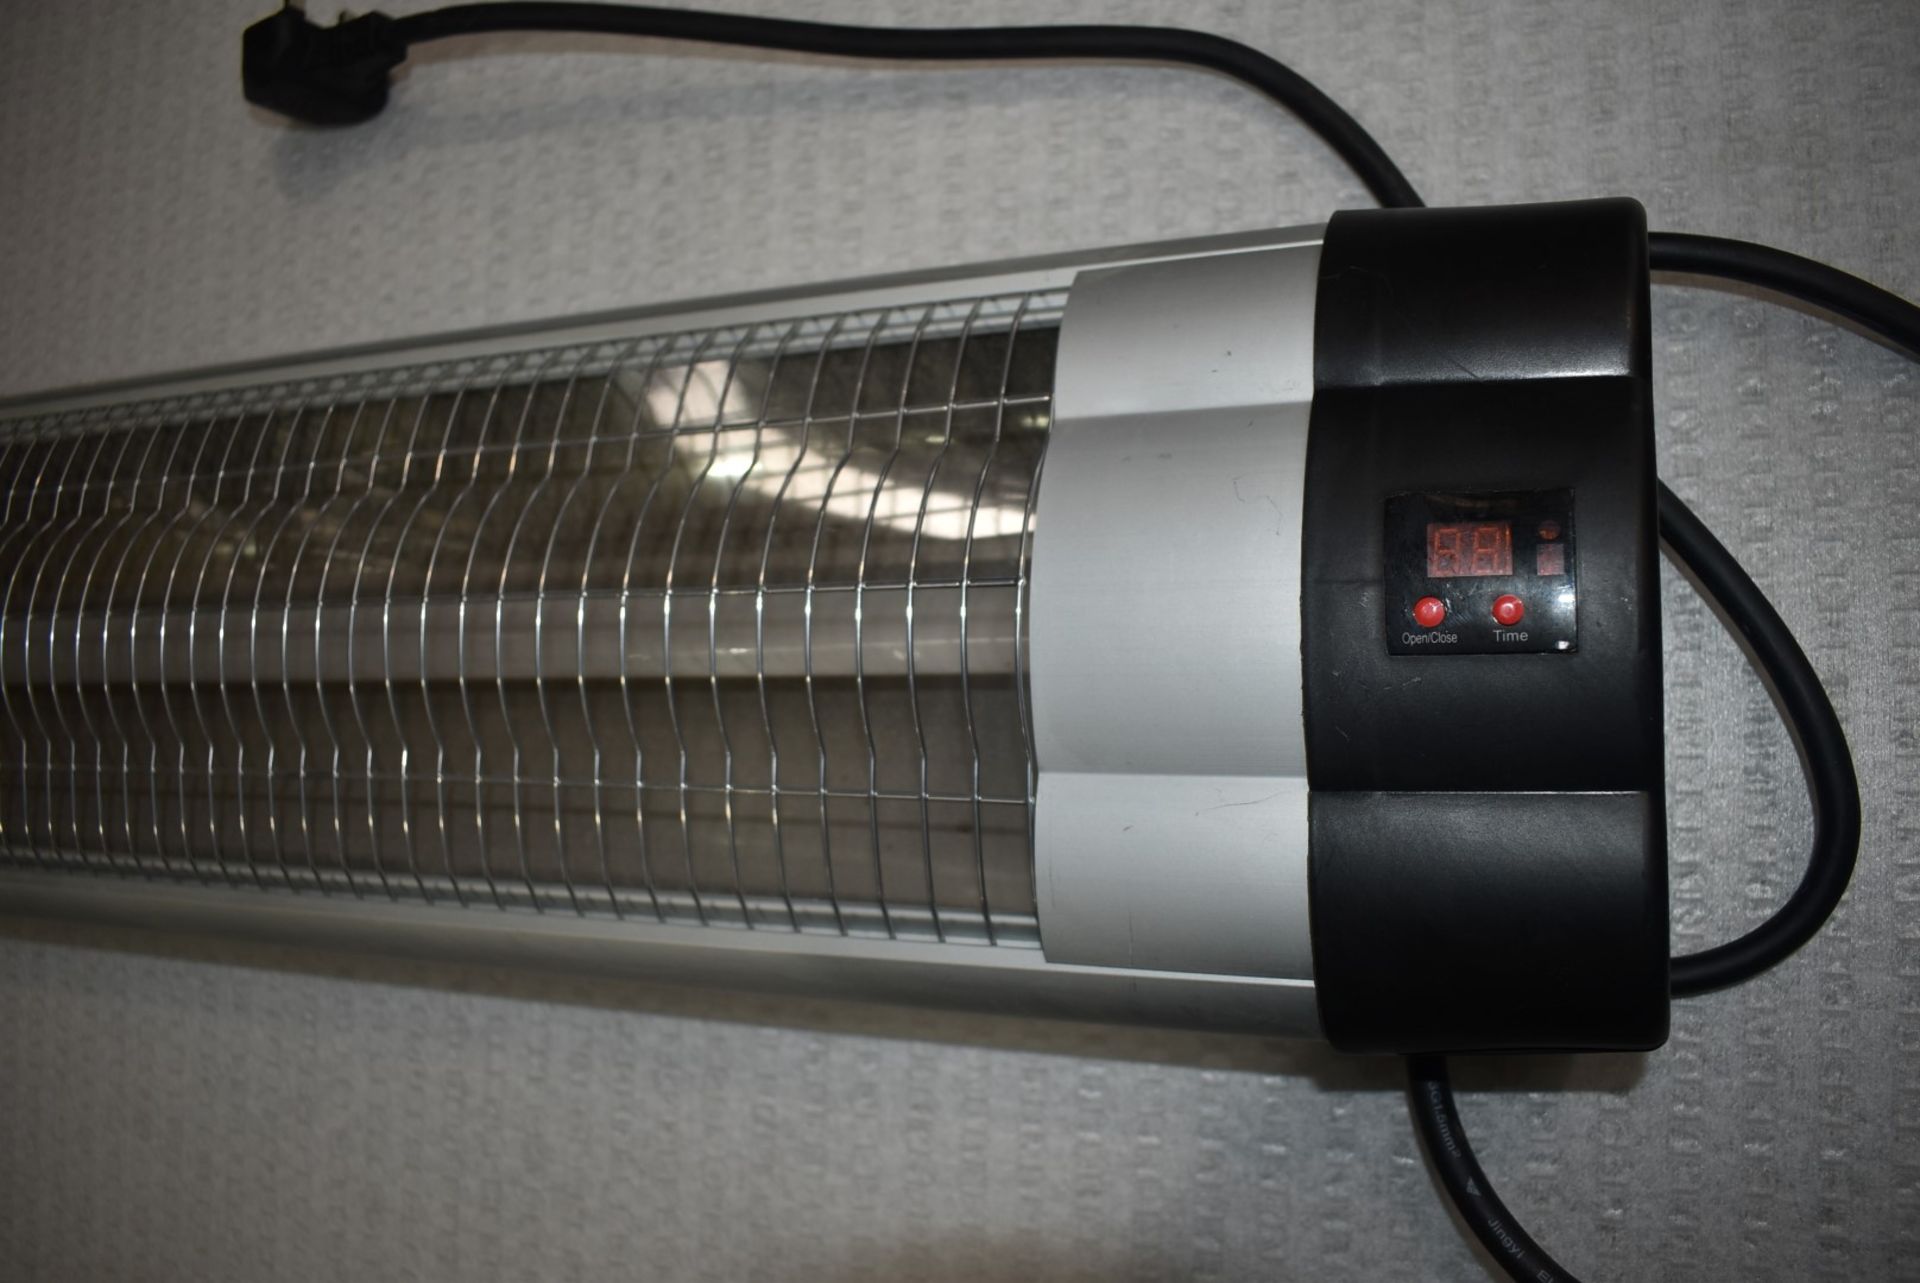 1 x Adexa Infrared Patio Heater - 3000w - Model PHW-3000R - Image 2 of 5